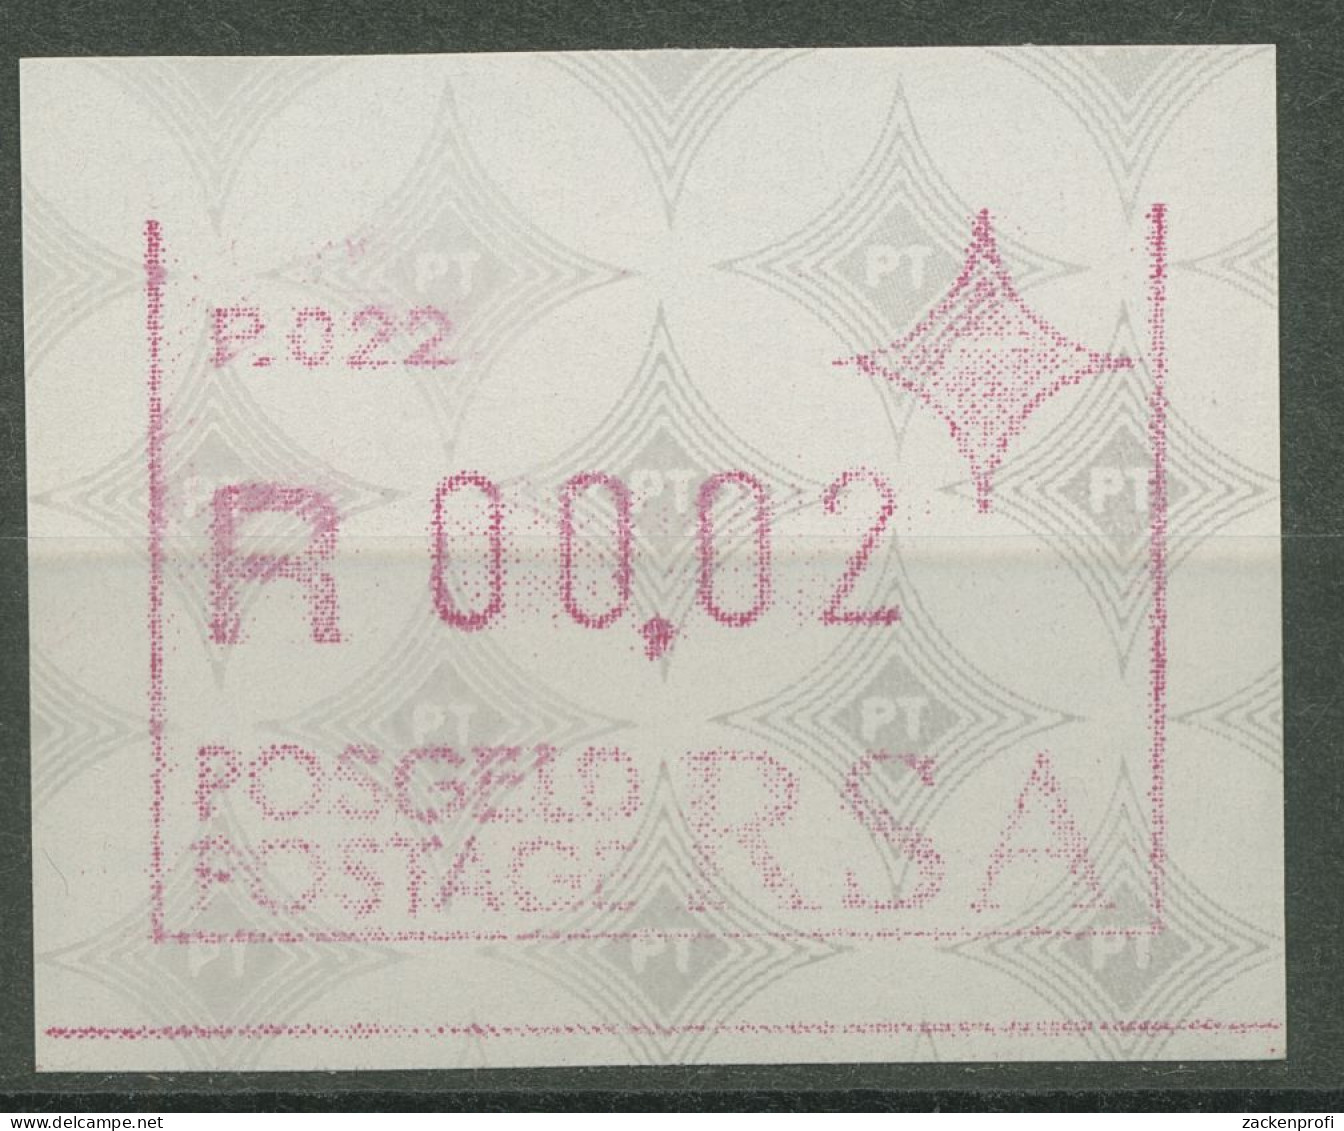 Südafrika ATM 1988 Freimarke Oberlinie Fehlt ATM 6.2 V Postfrisch - Vignettes D'affranchissement (Frama)